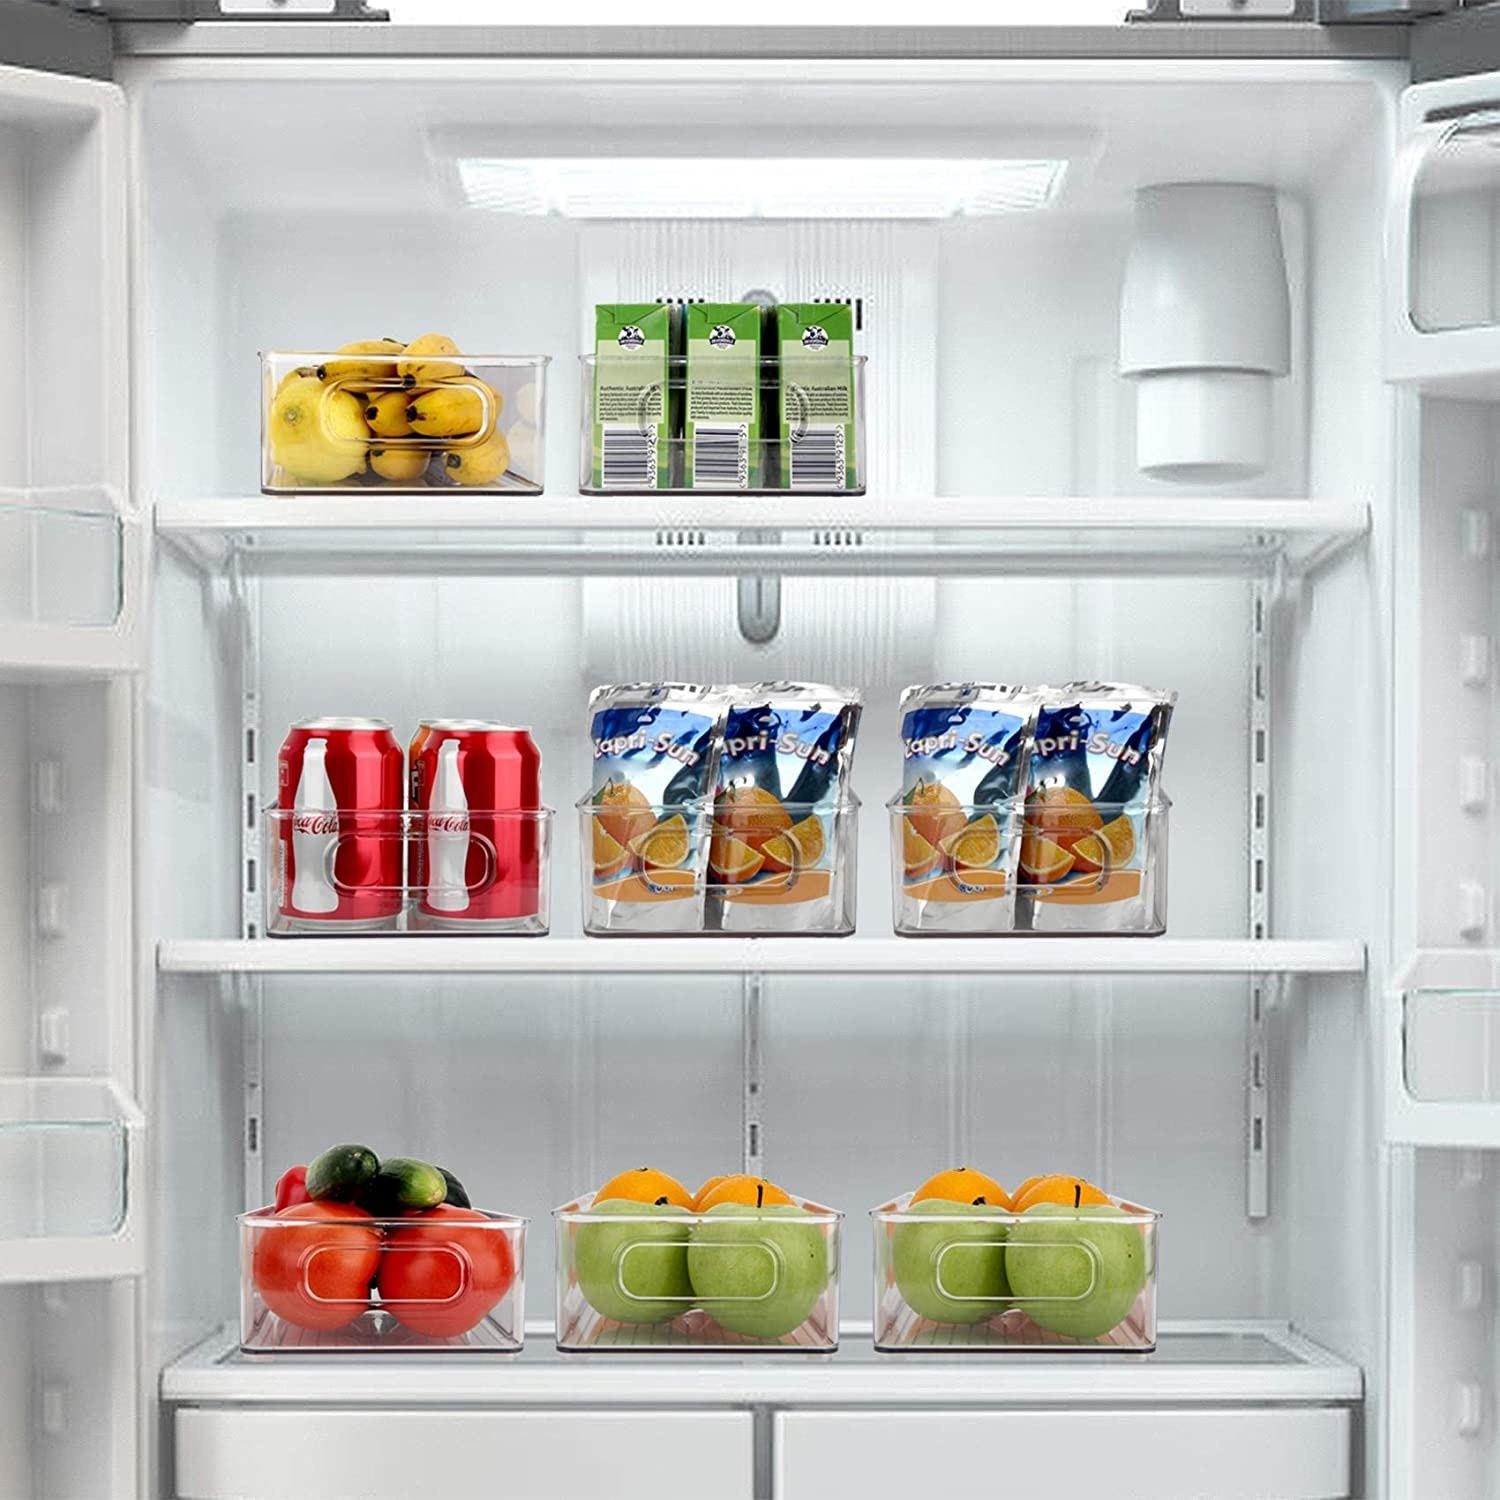 Set of fridge bins placed inside refrigerator